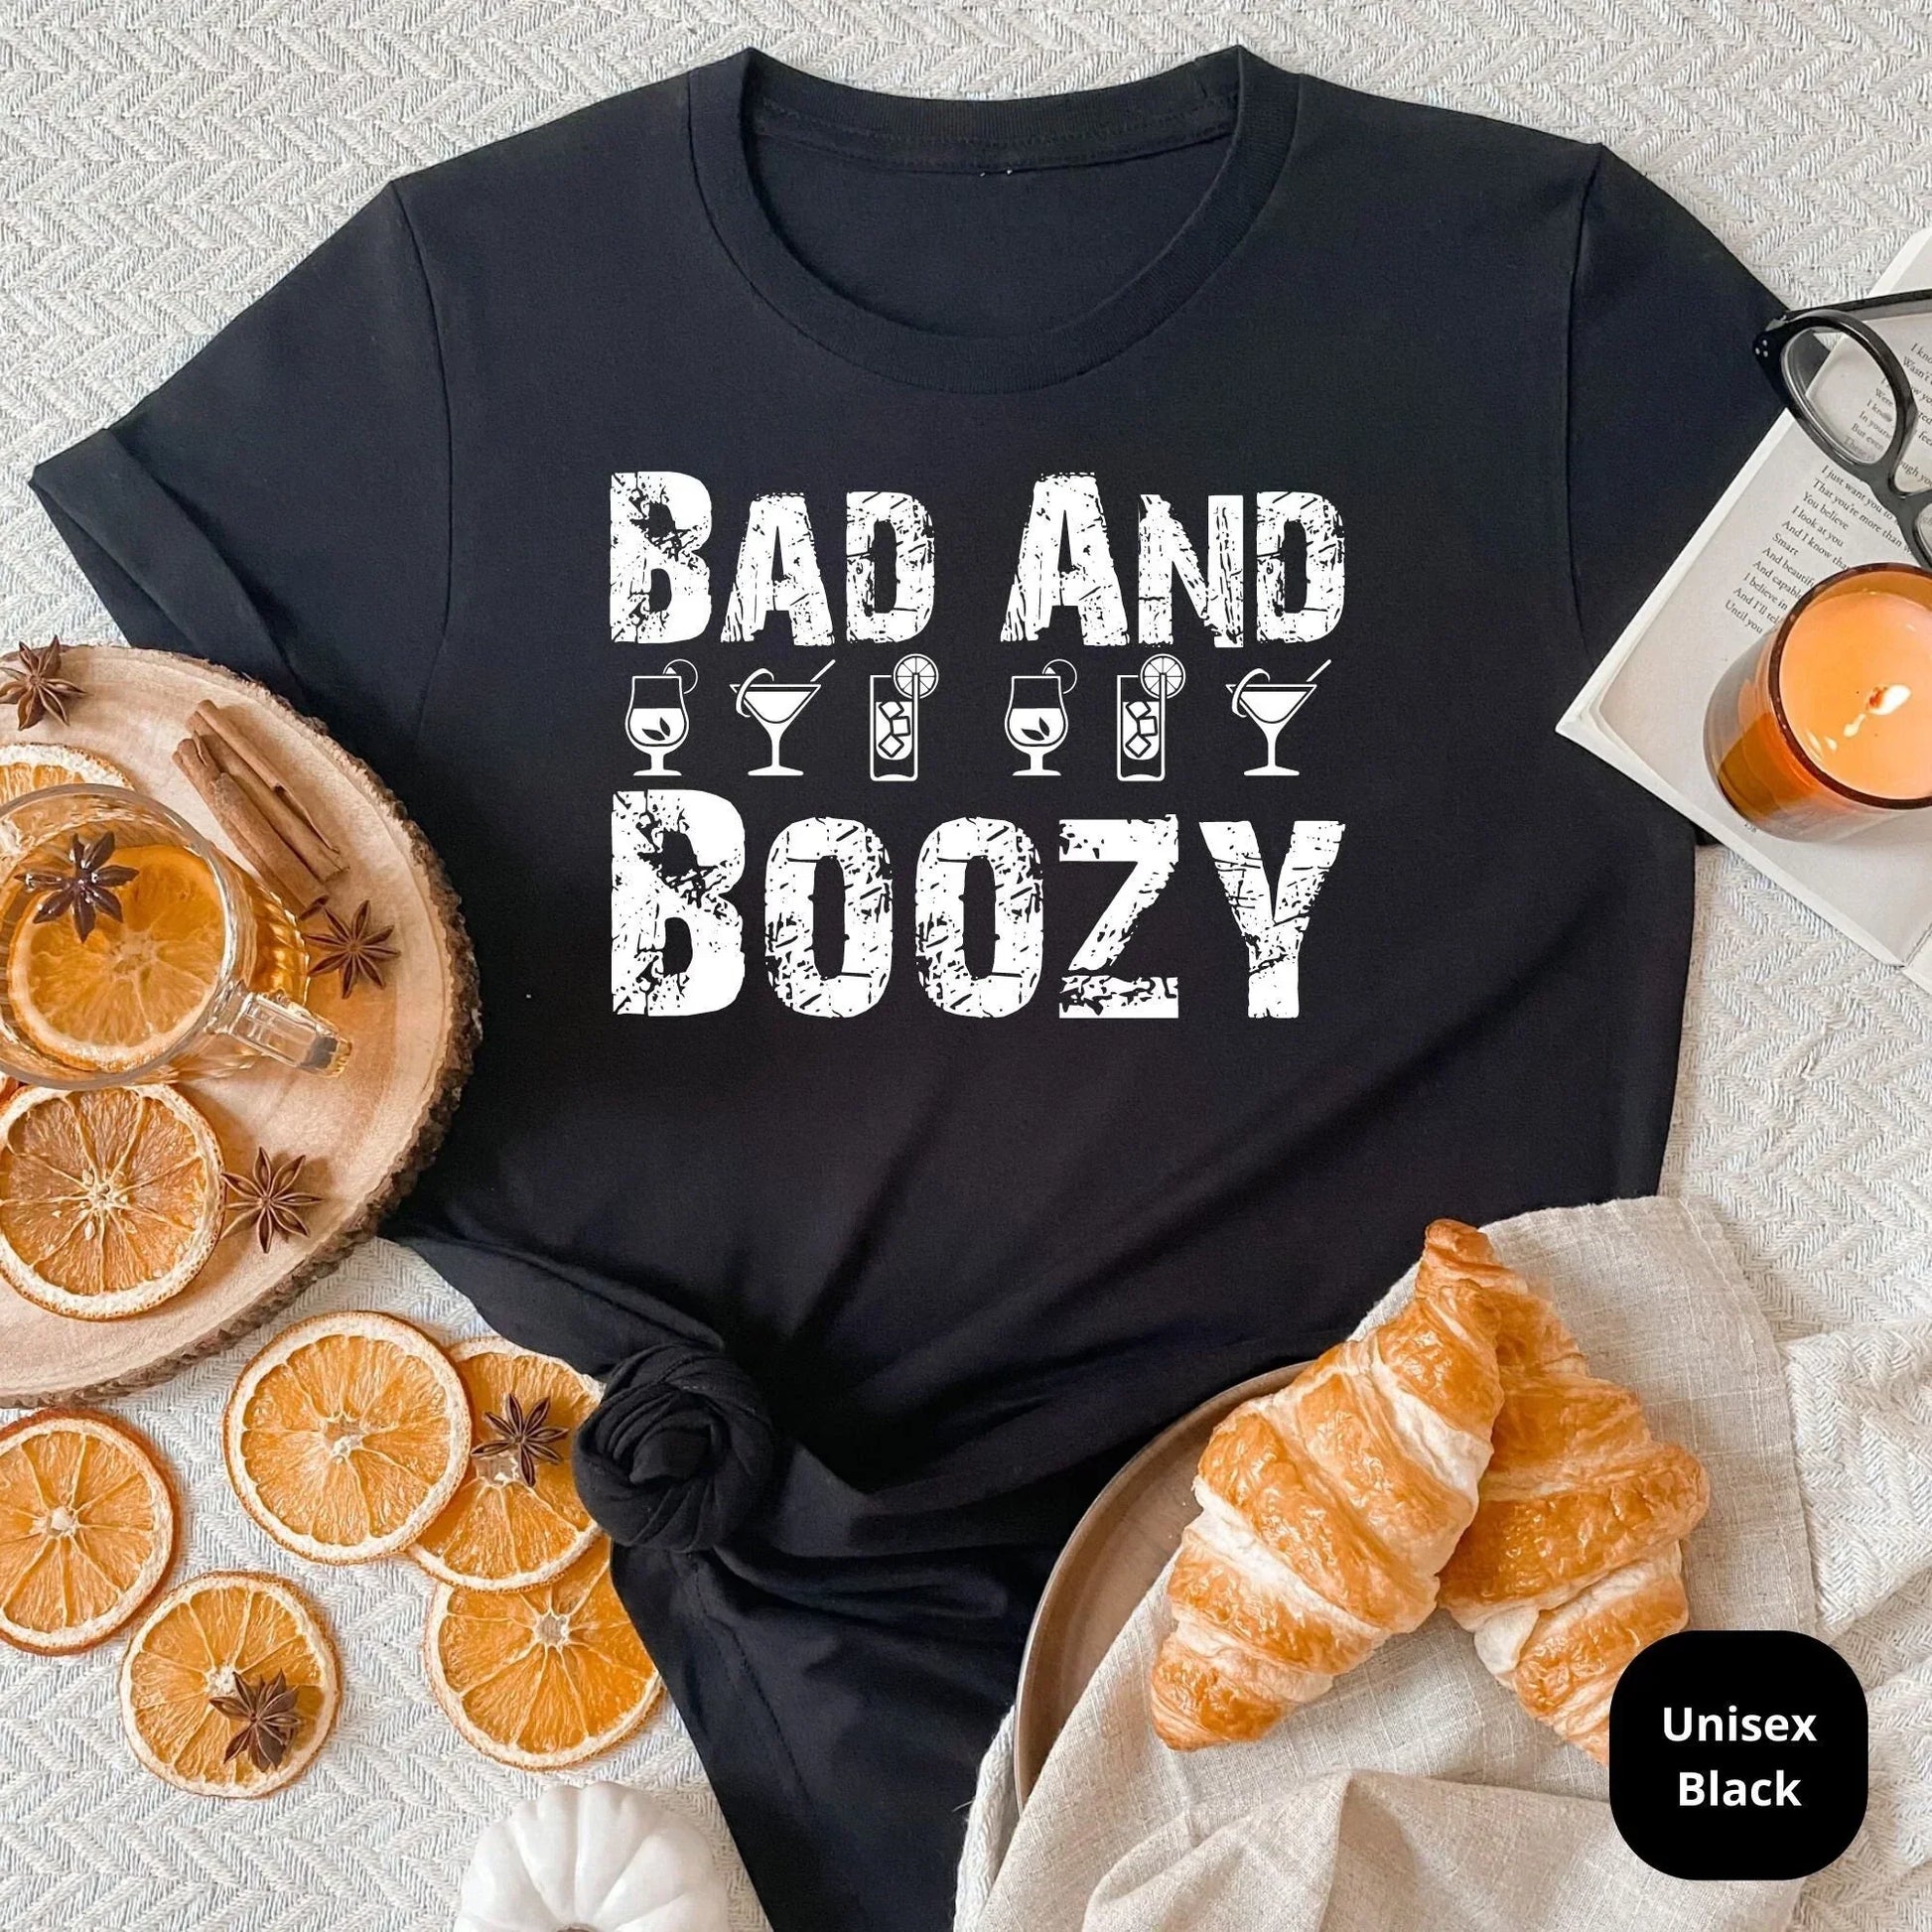 Bad and Boozy, Funny Cruise Shirt HMDesignStudioUS